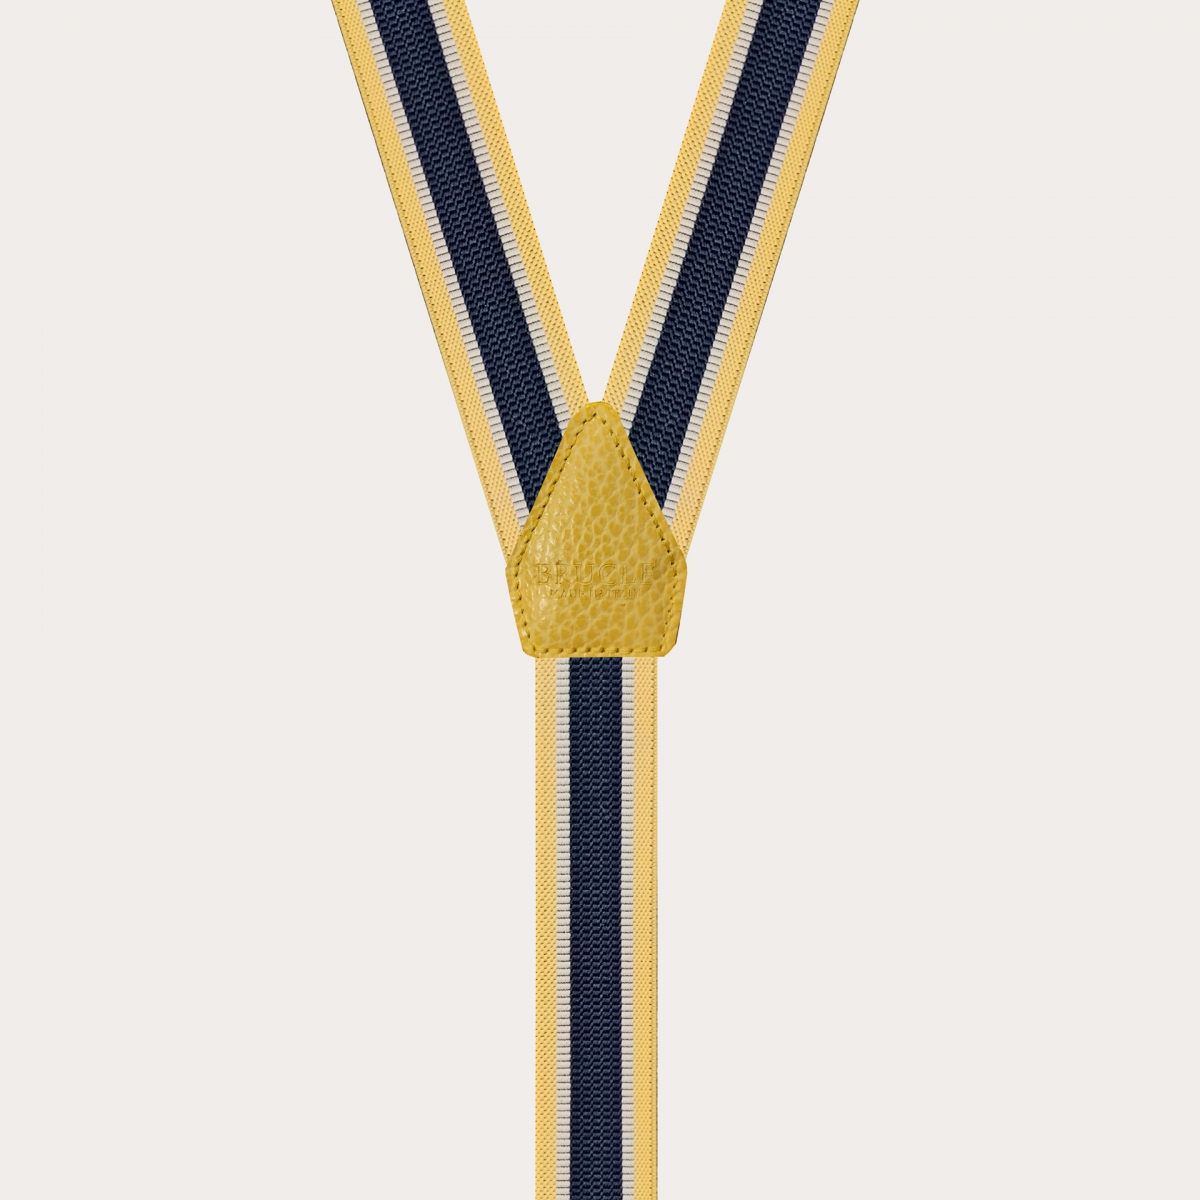 Formal braces regimental yellow braid ends